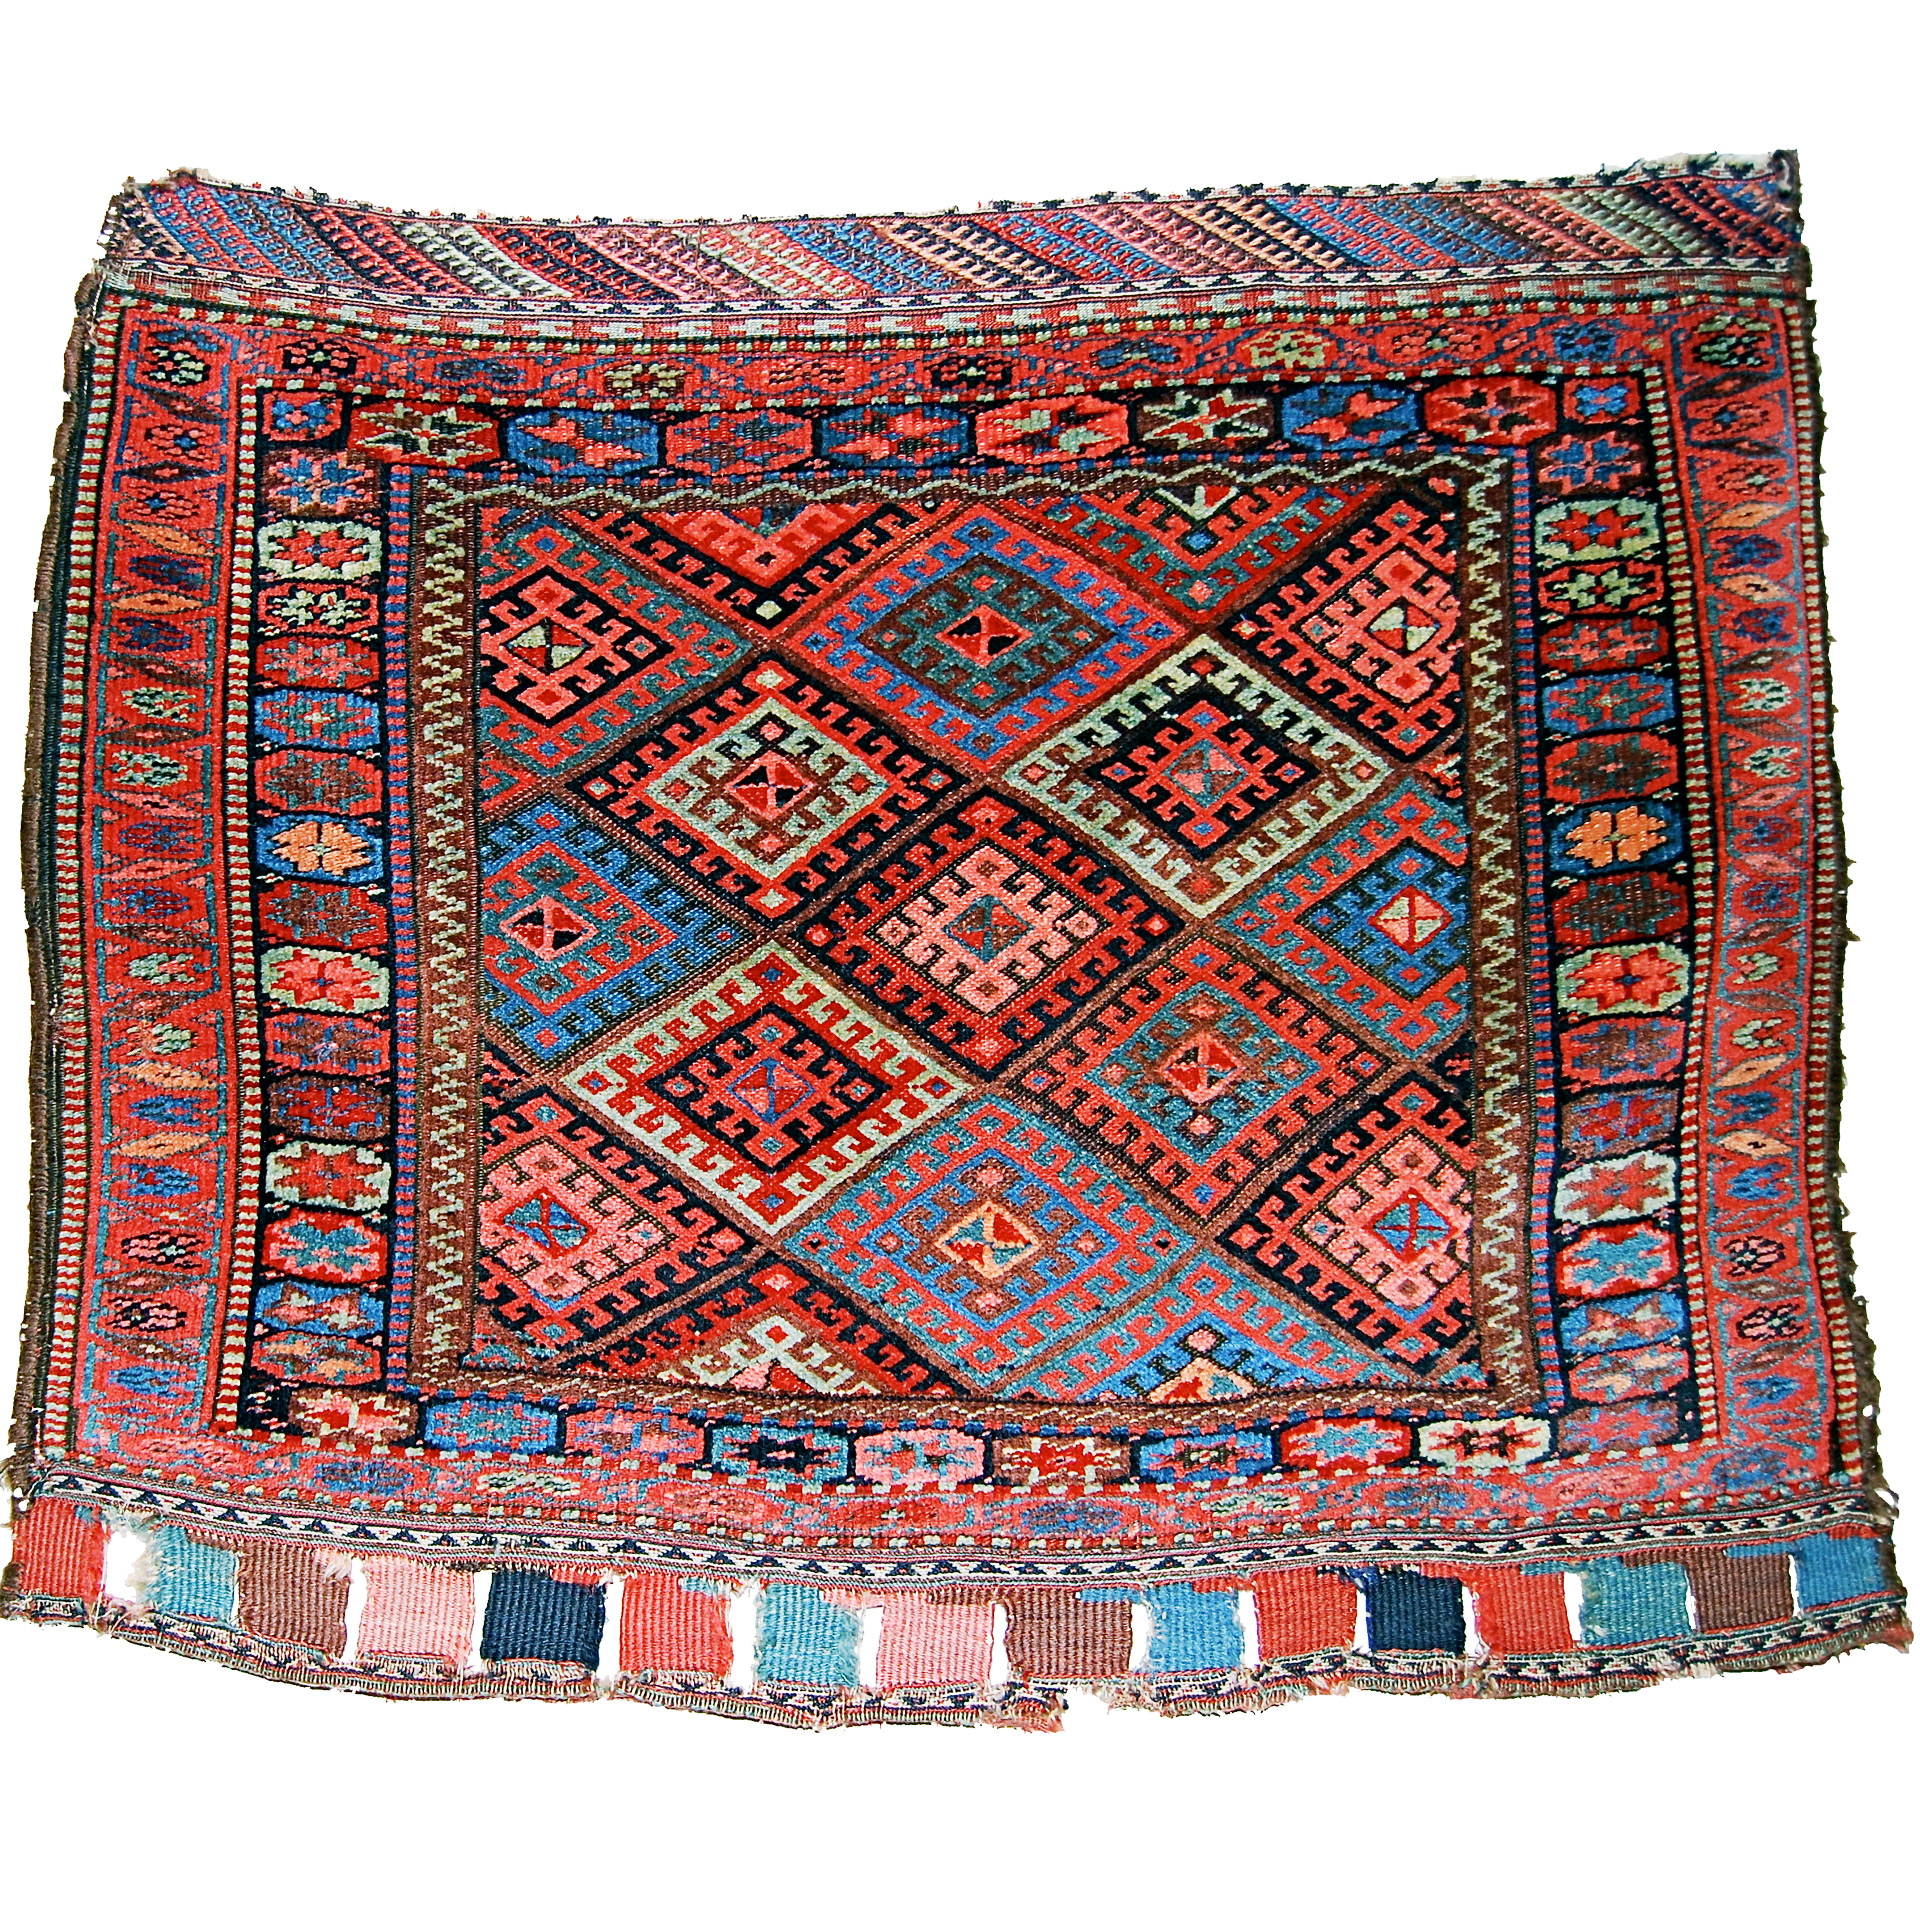 Large antique Kurdish bagface with diamond design, northwest Persia - Douglas Stock Gallery antique Oriental rug research archives